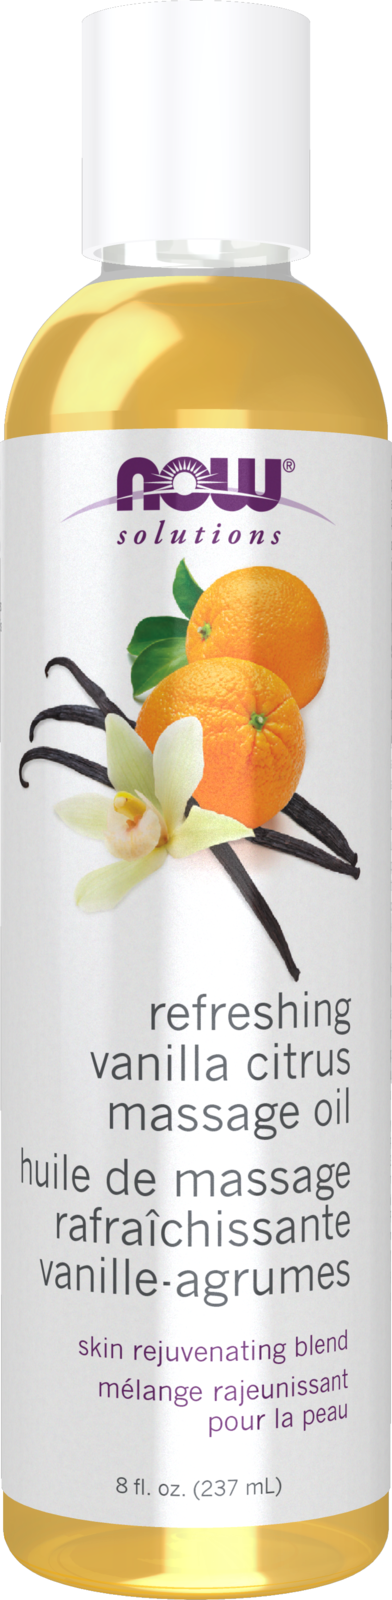 Refreshing Vanilla Citrus Massage Oil - 8 fl. oz. Bottle Front